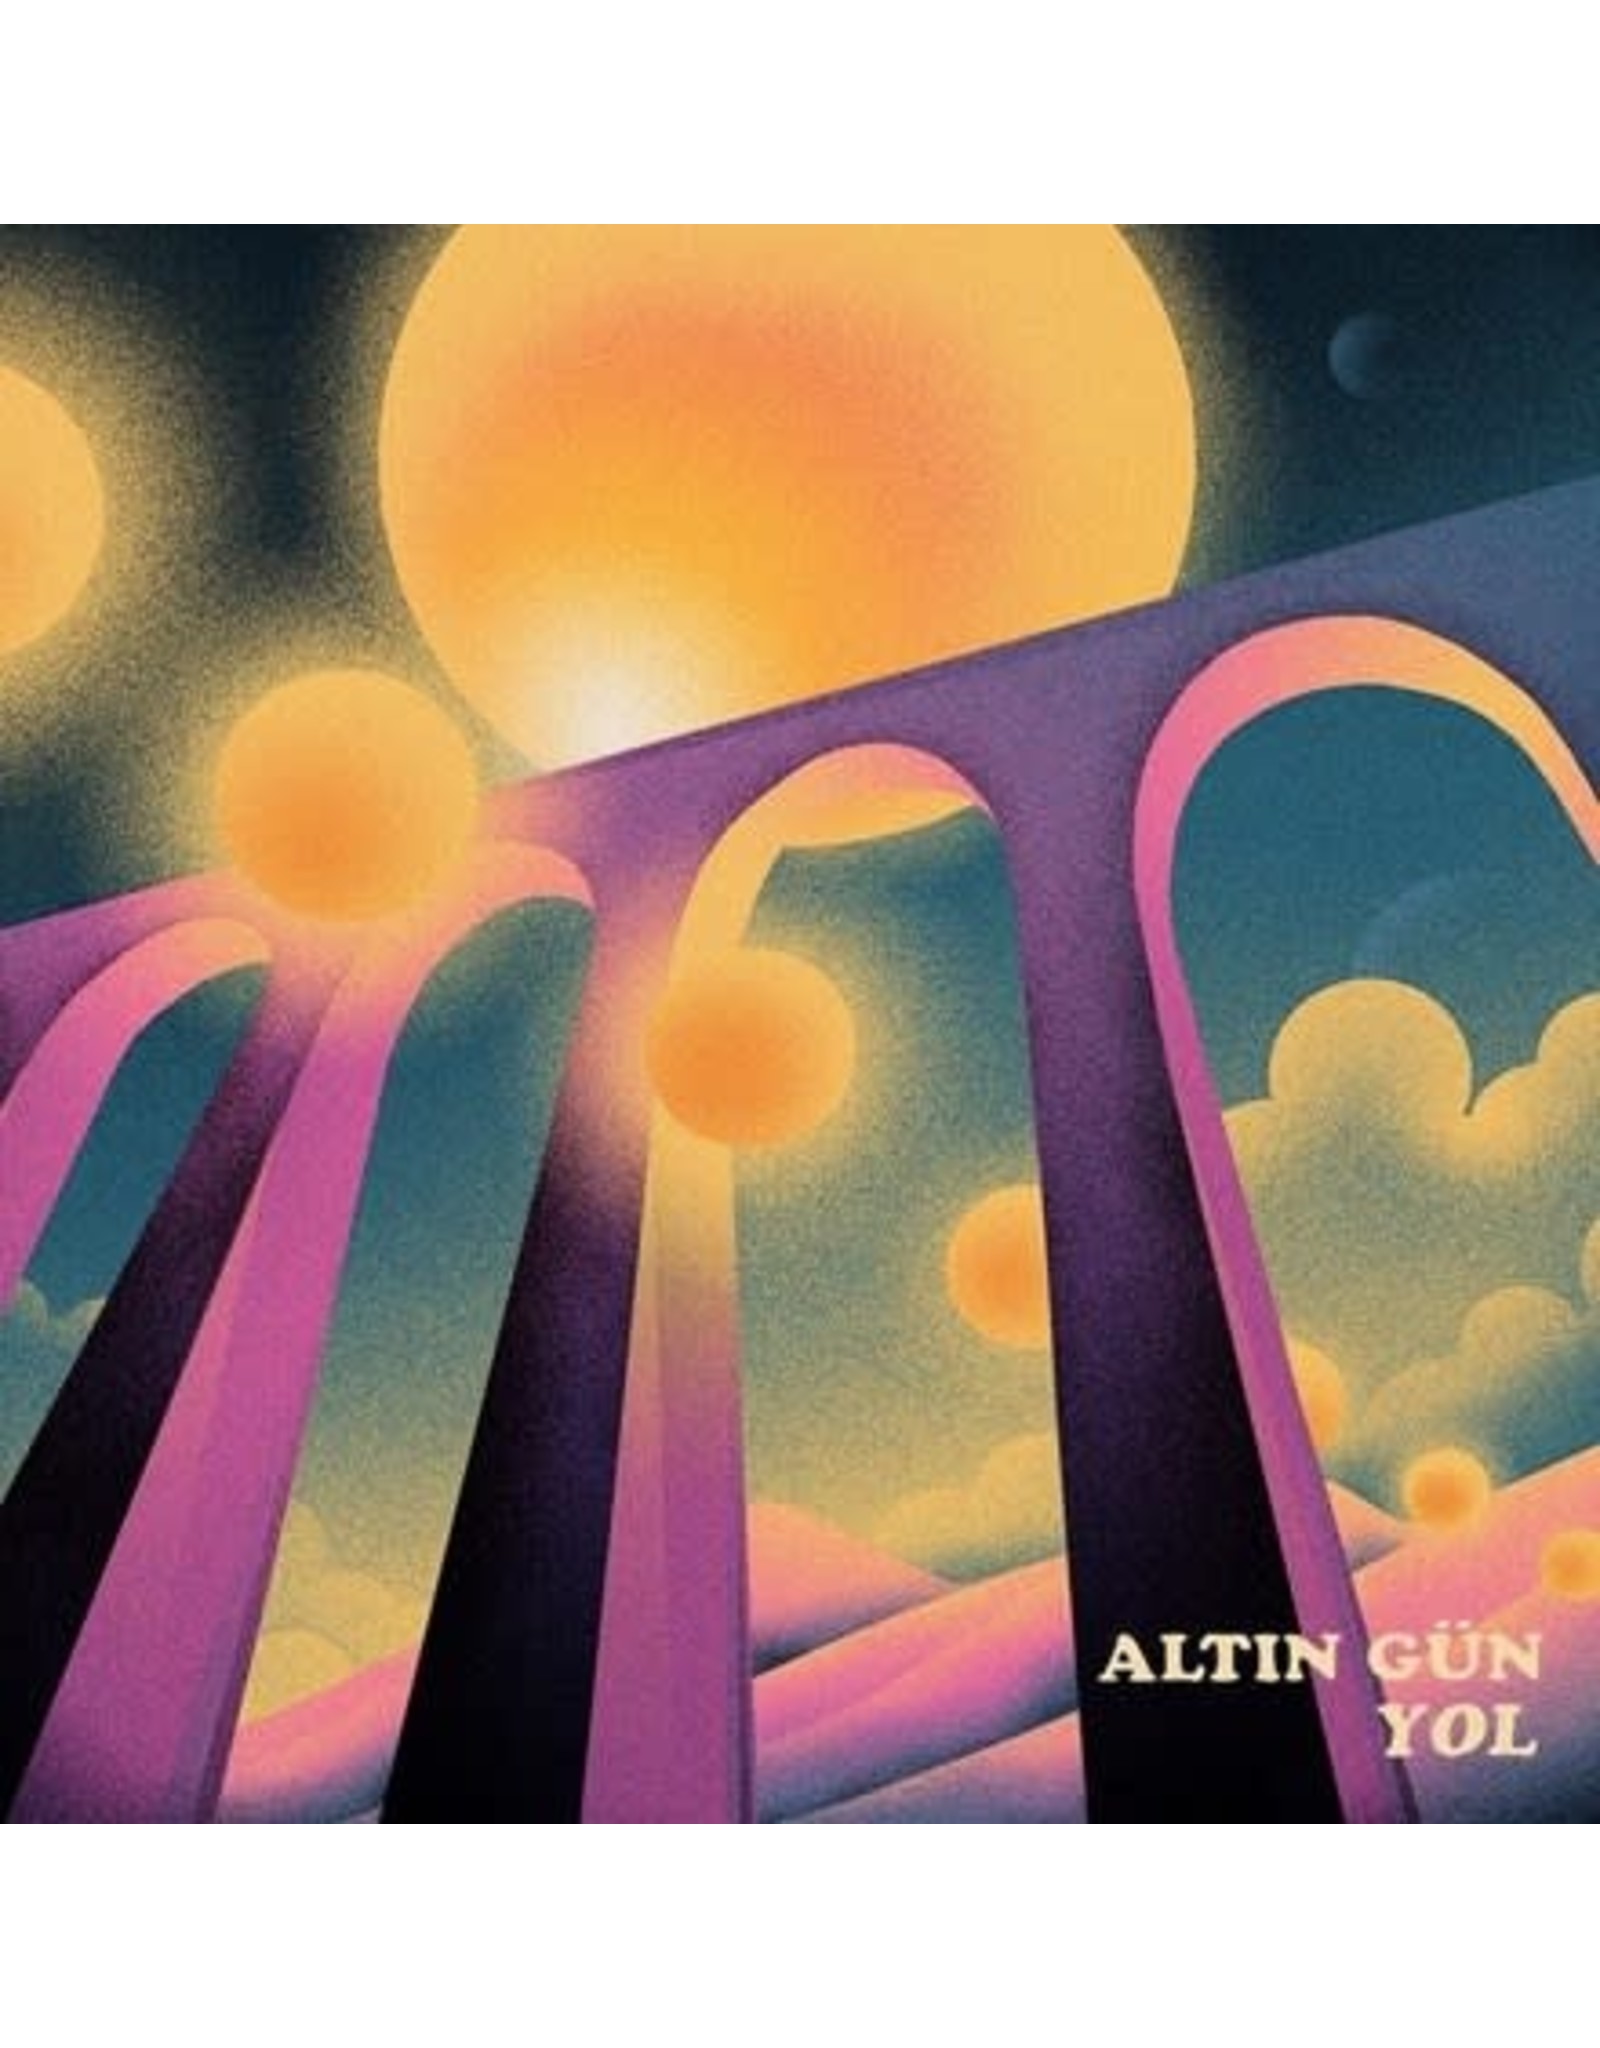 ATO Altin Gun: Yol (gold) LP